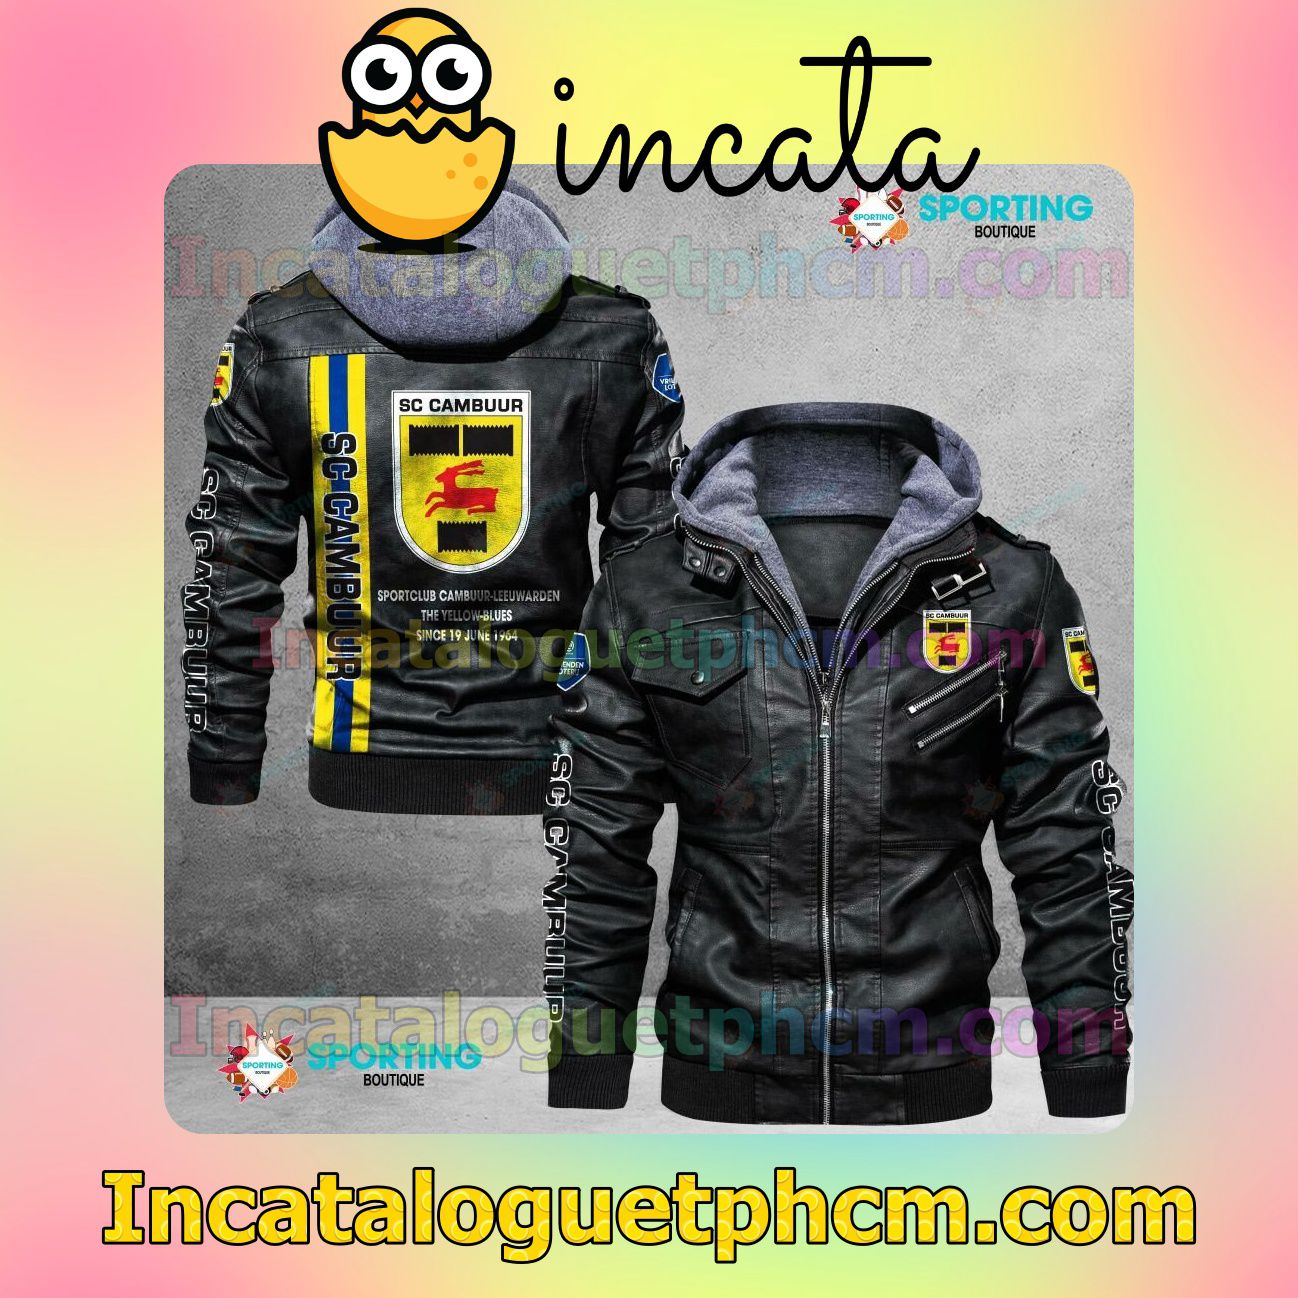 Beautiful SC Cambuur Brand Uniform Leather Jacket